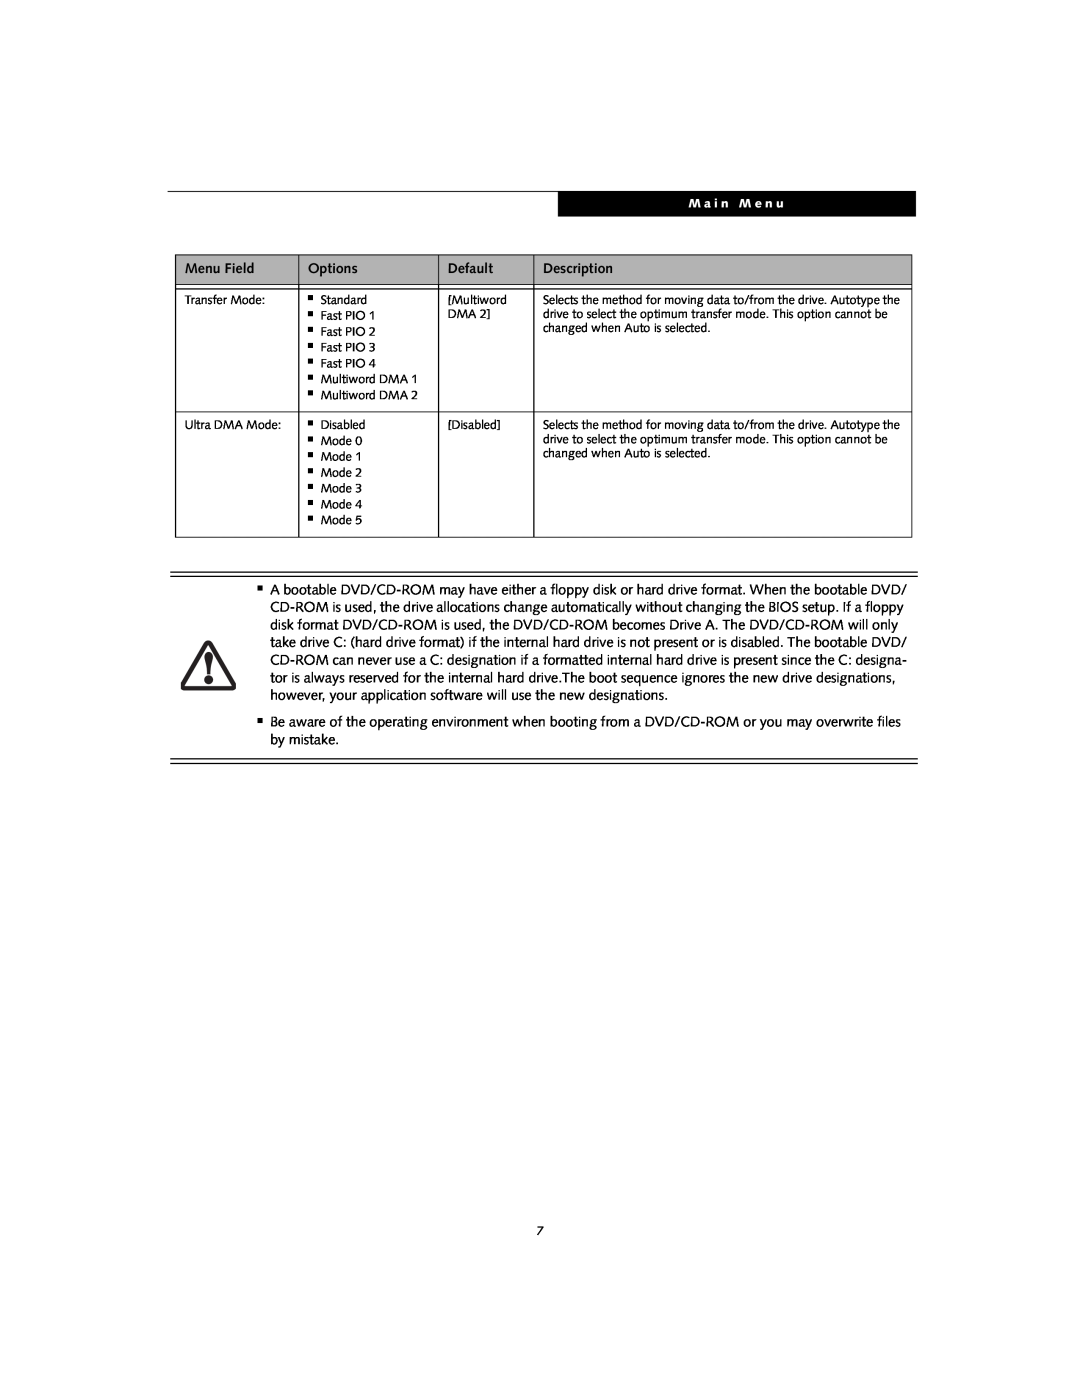 Fujitsu Siemens Computers S2110 manual Menu Field, Options, Default, Description 